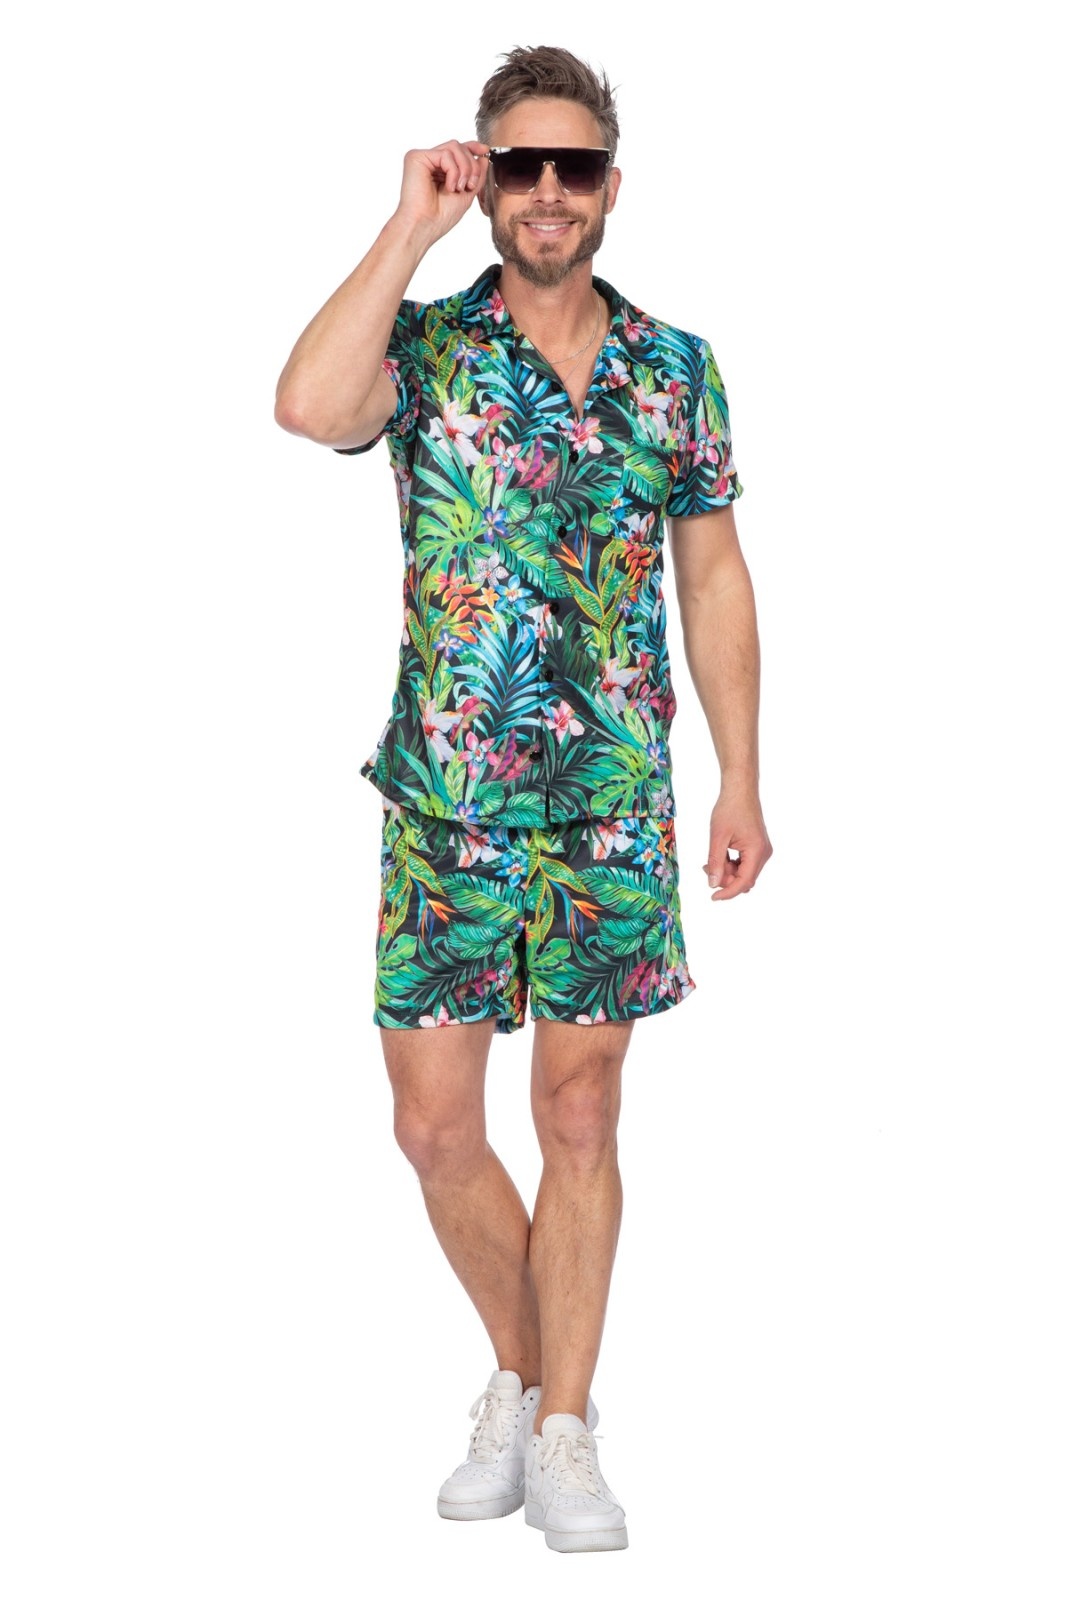 Wilbers - Hawaii & Carribean & Tropisch Kostuum - Hawaii Harrie Op Het Strand - Man - groen,zwart - Large - Carnavalskleding - Verkleedkleding